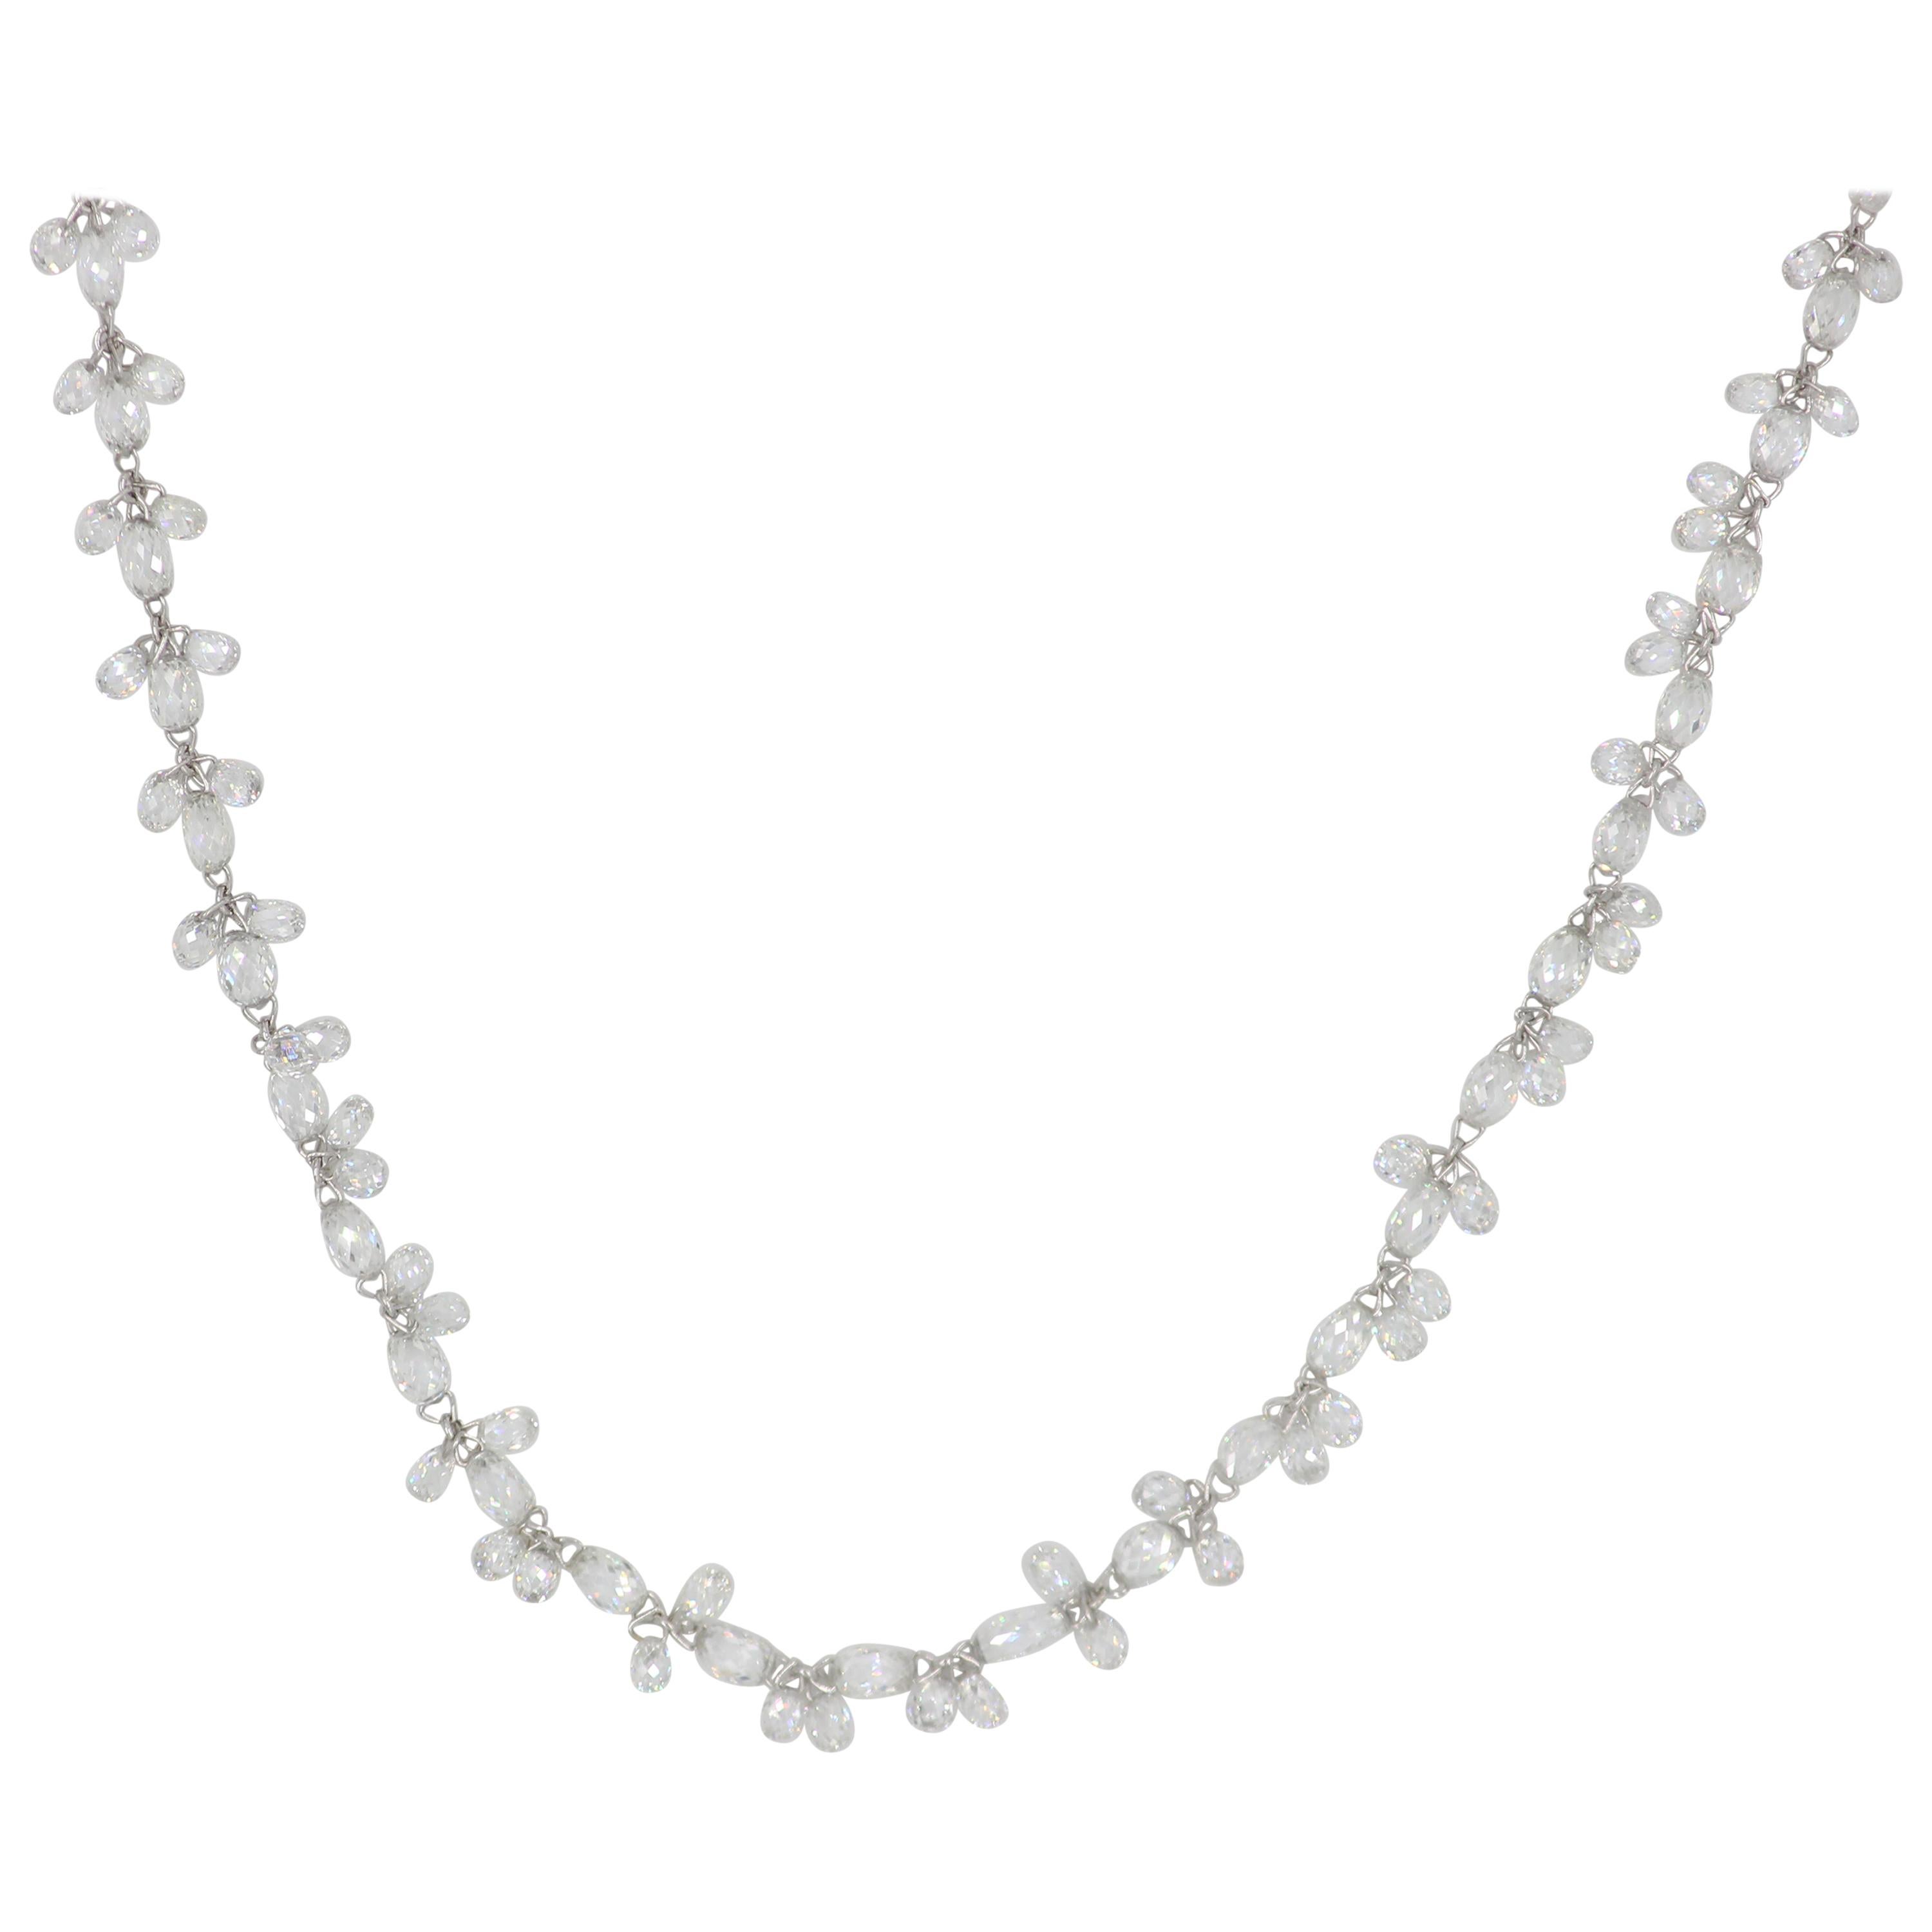 PANIM 26.45 Carat Floral Briolette Necklace in White Gold Necklace For Sale